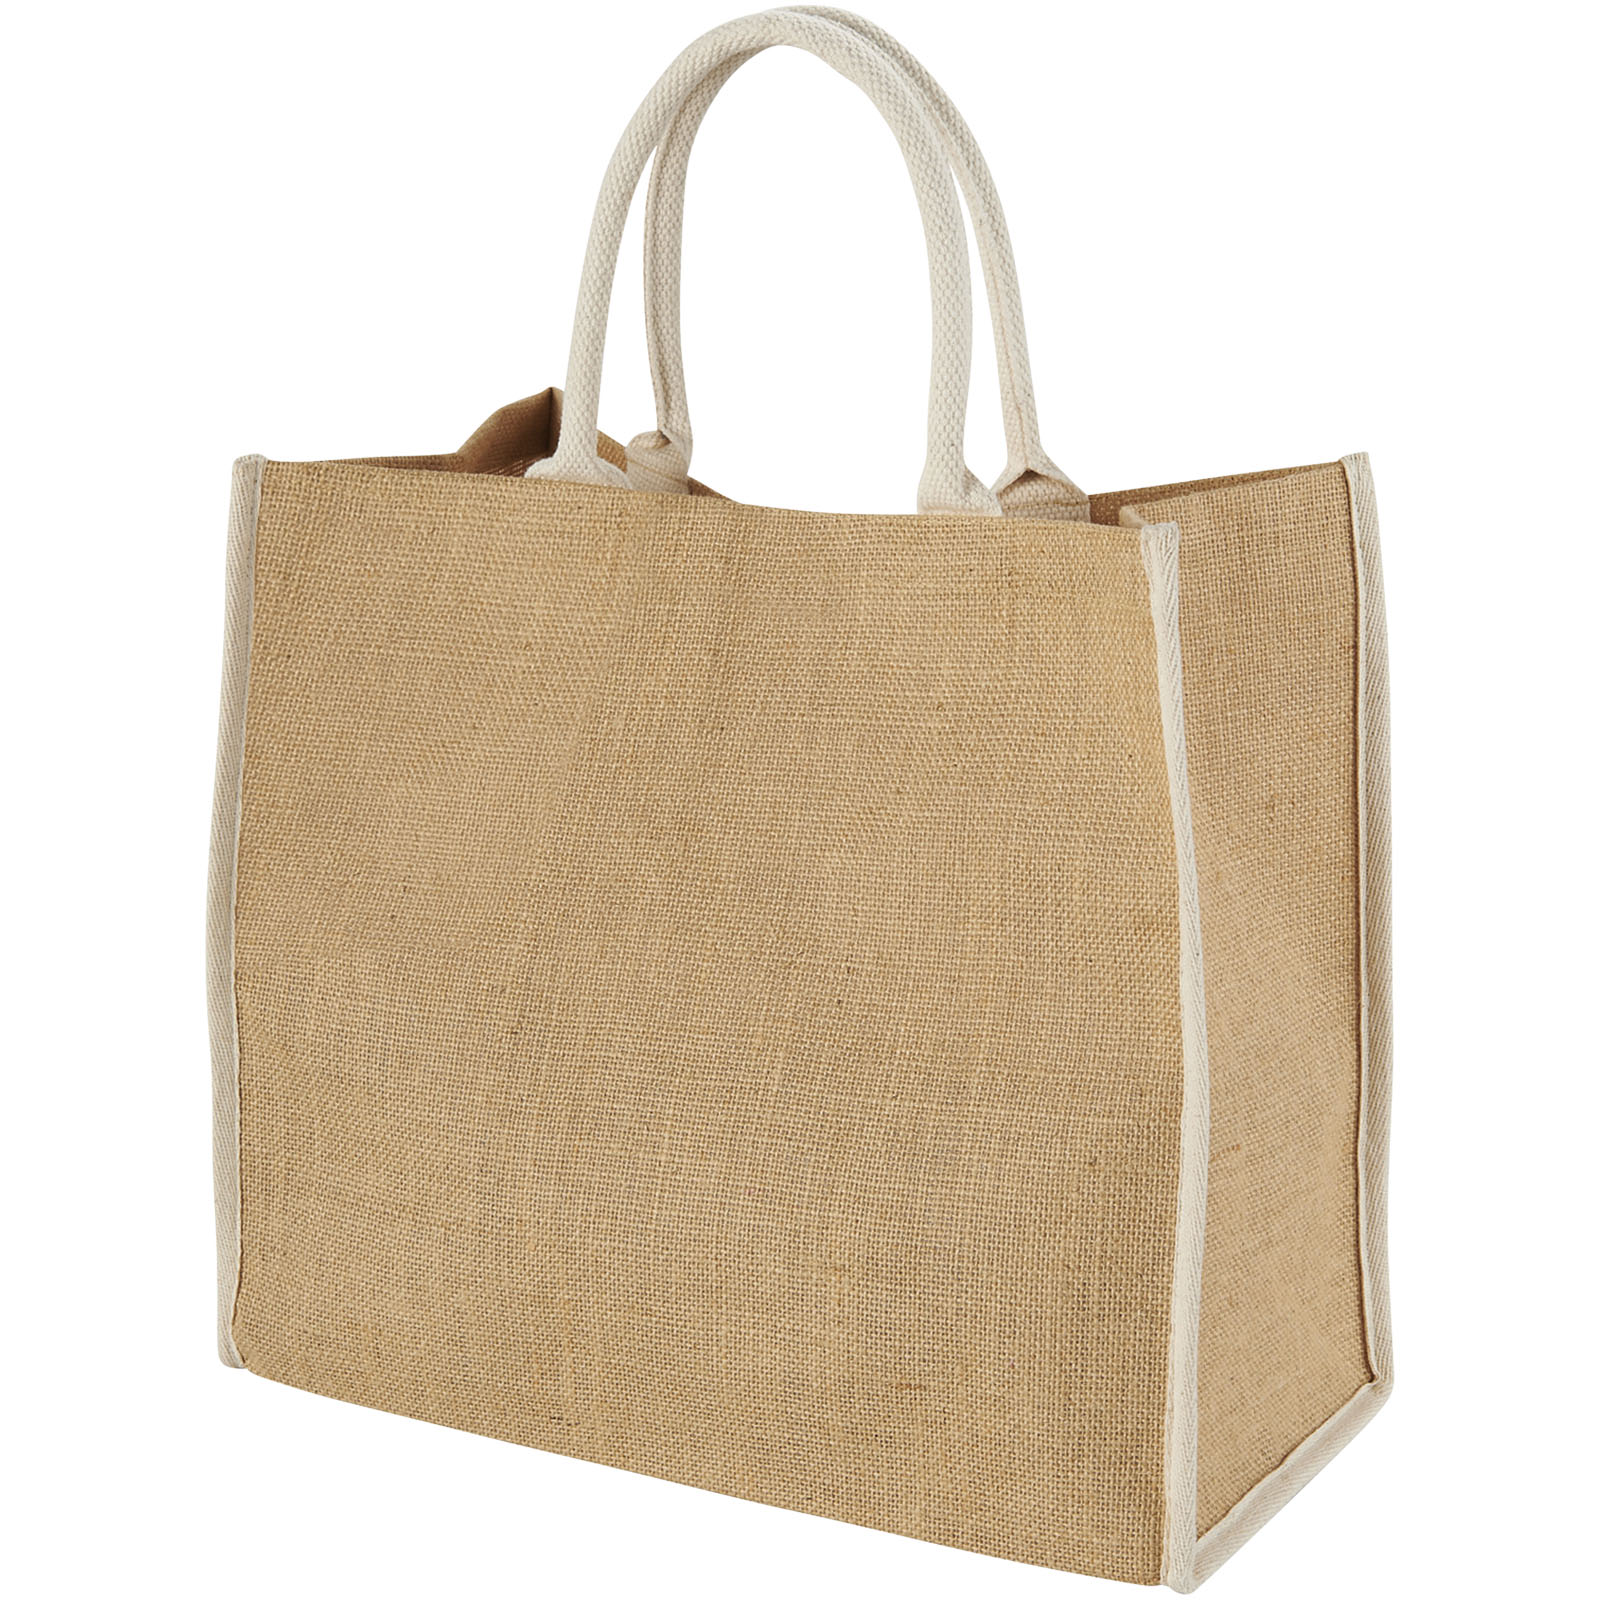 Shopping & Tote Bags - Harry coloured edge jute tote bag 25L